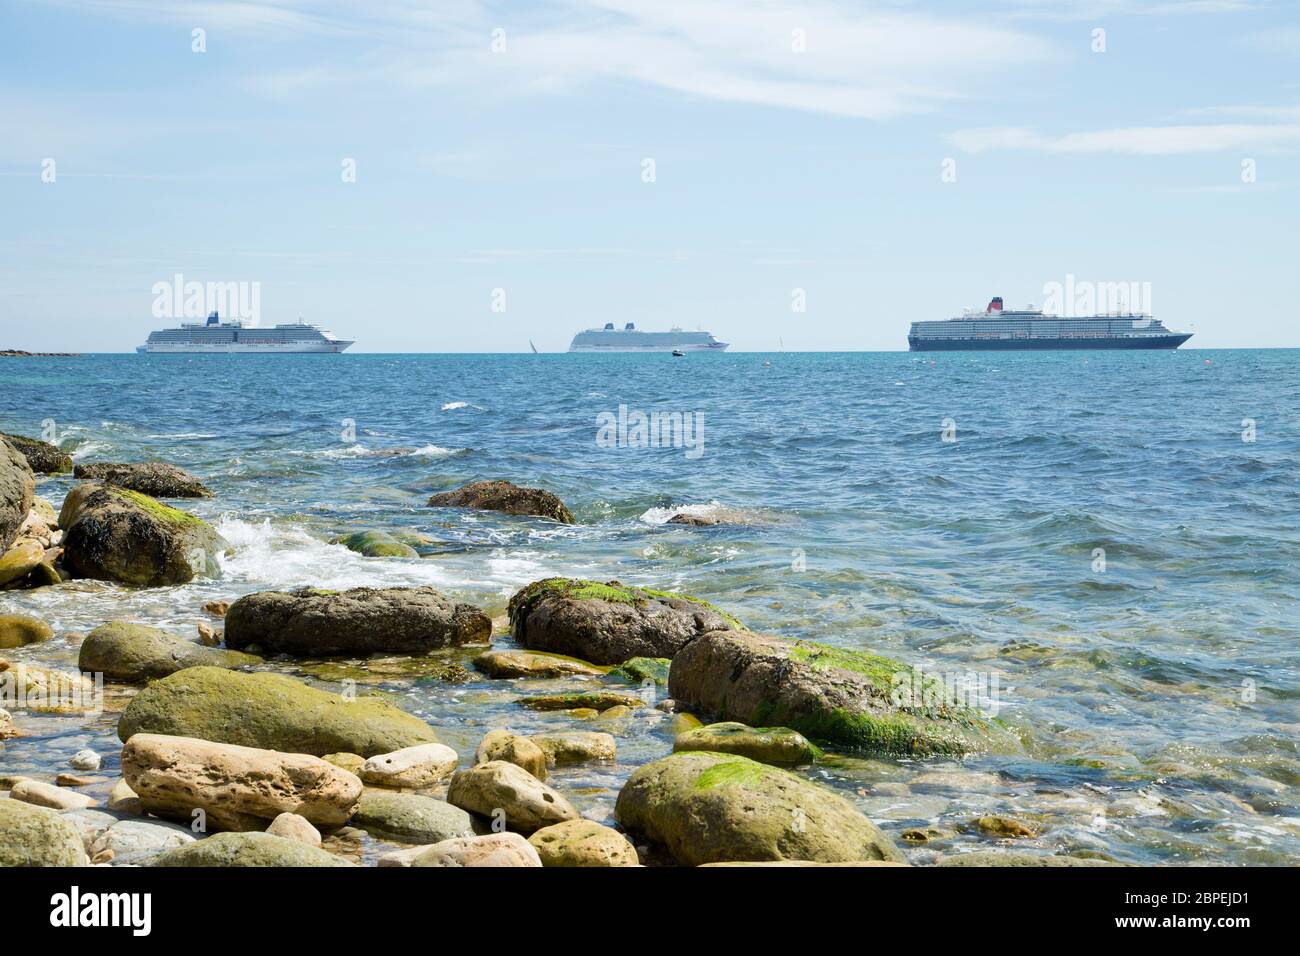 cruise ships in Weymouth bay during UK Lockdown 2020 Stock Photo